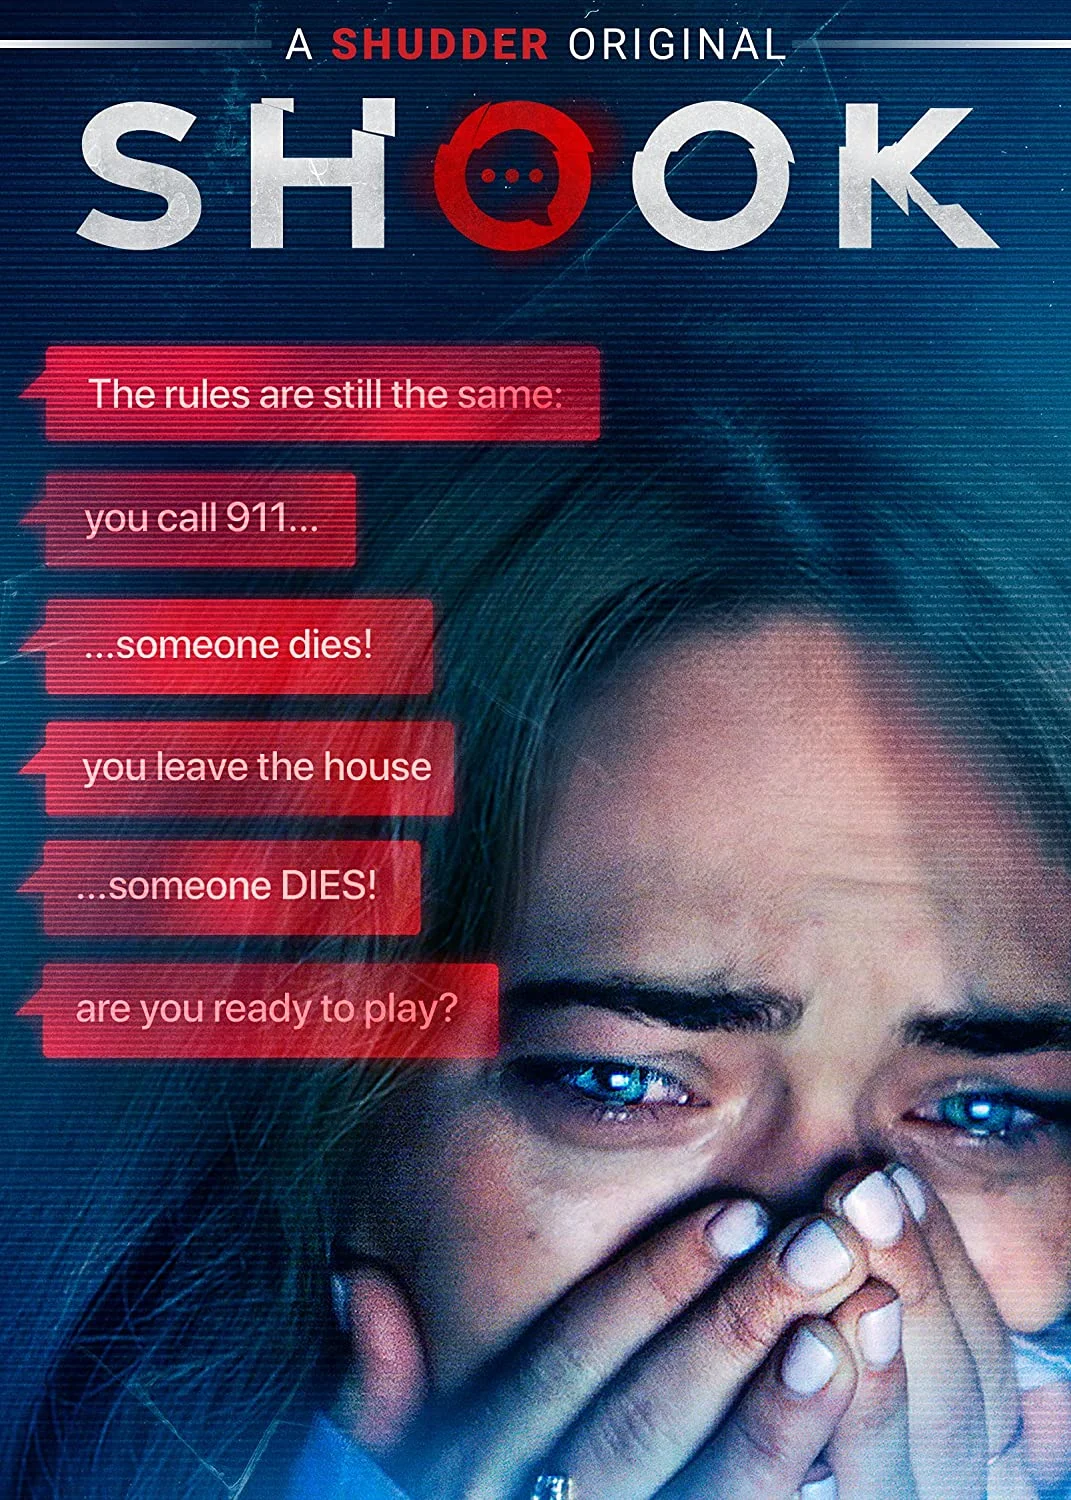 Shook on MovieShack